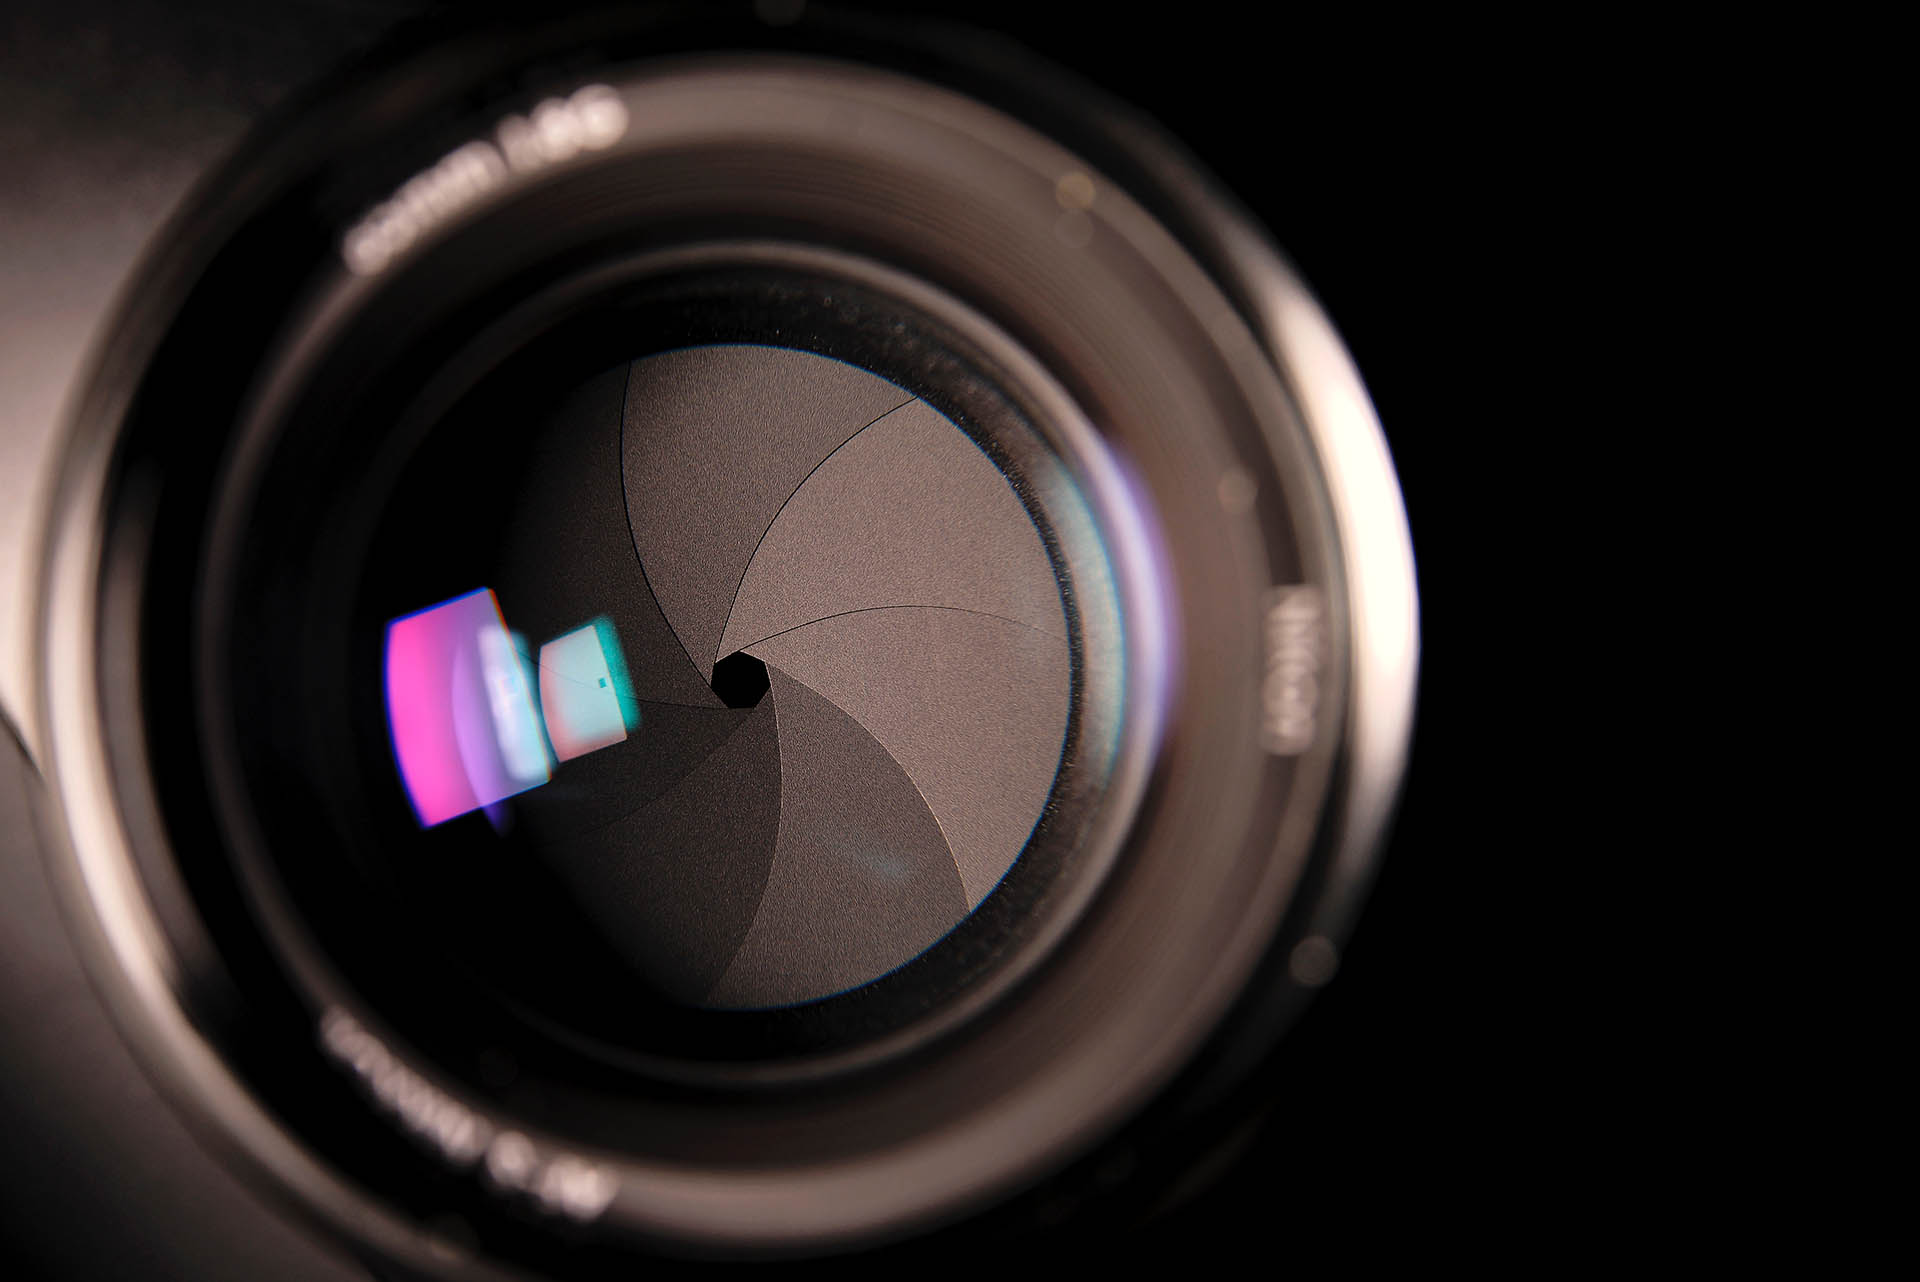 Image of a camera lense